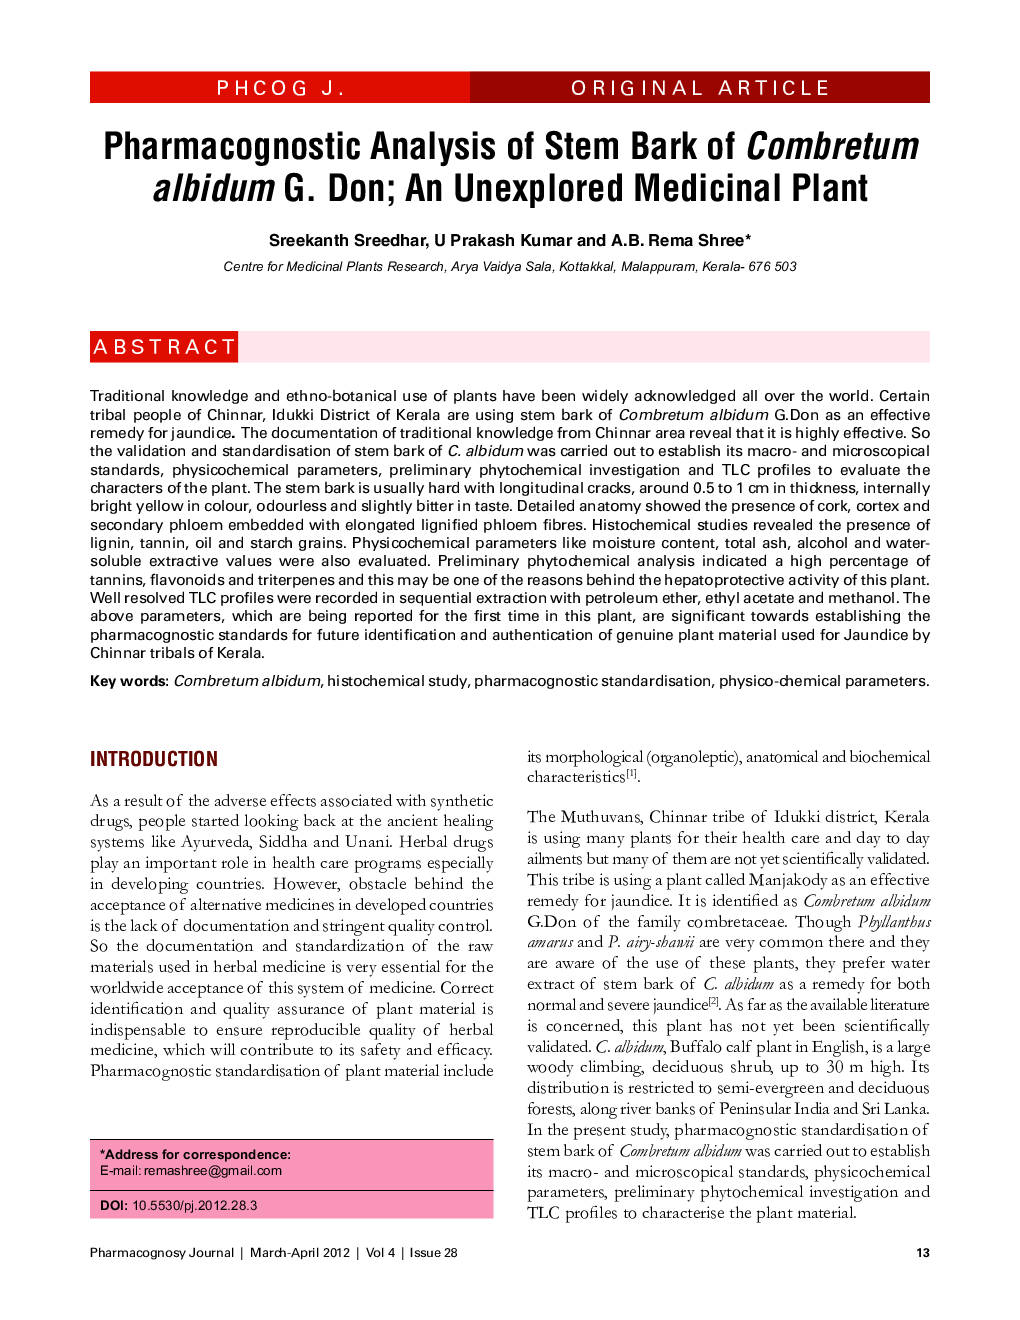 Pharmacognostic Analysis of Stem Bark of Combretum albidum G. Don; An Unexplored Medicinal Plant